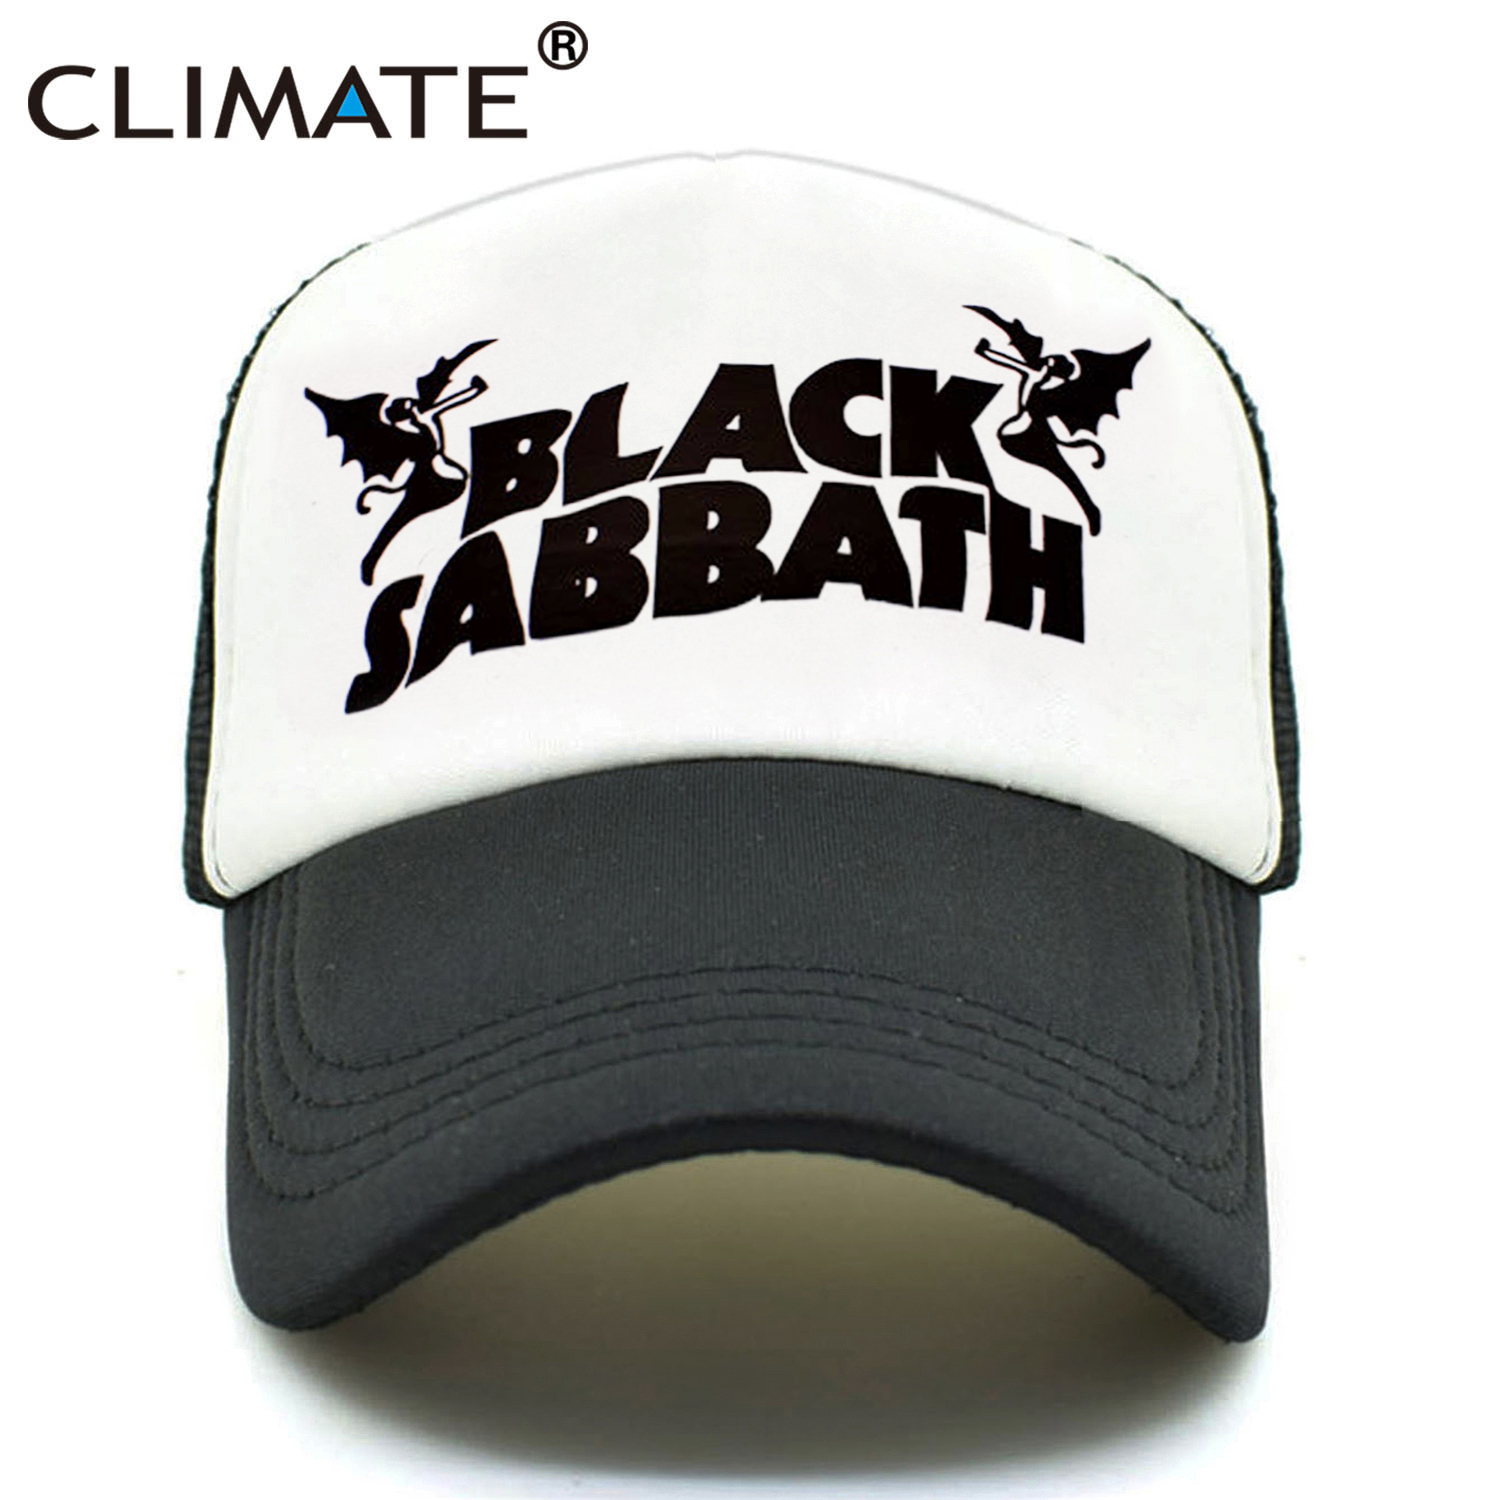 

CLIMATE Men Women Trucker Caps Black Sabbath Rock Caps Cool Summer Heavy Music Band Baseball Mesh Net Trucker Cap Hat, Blue;gray